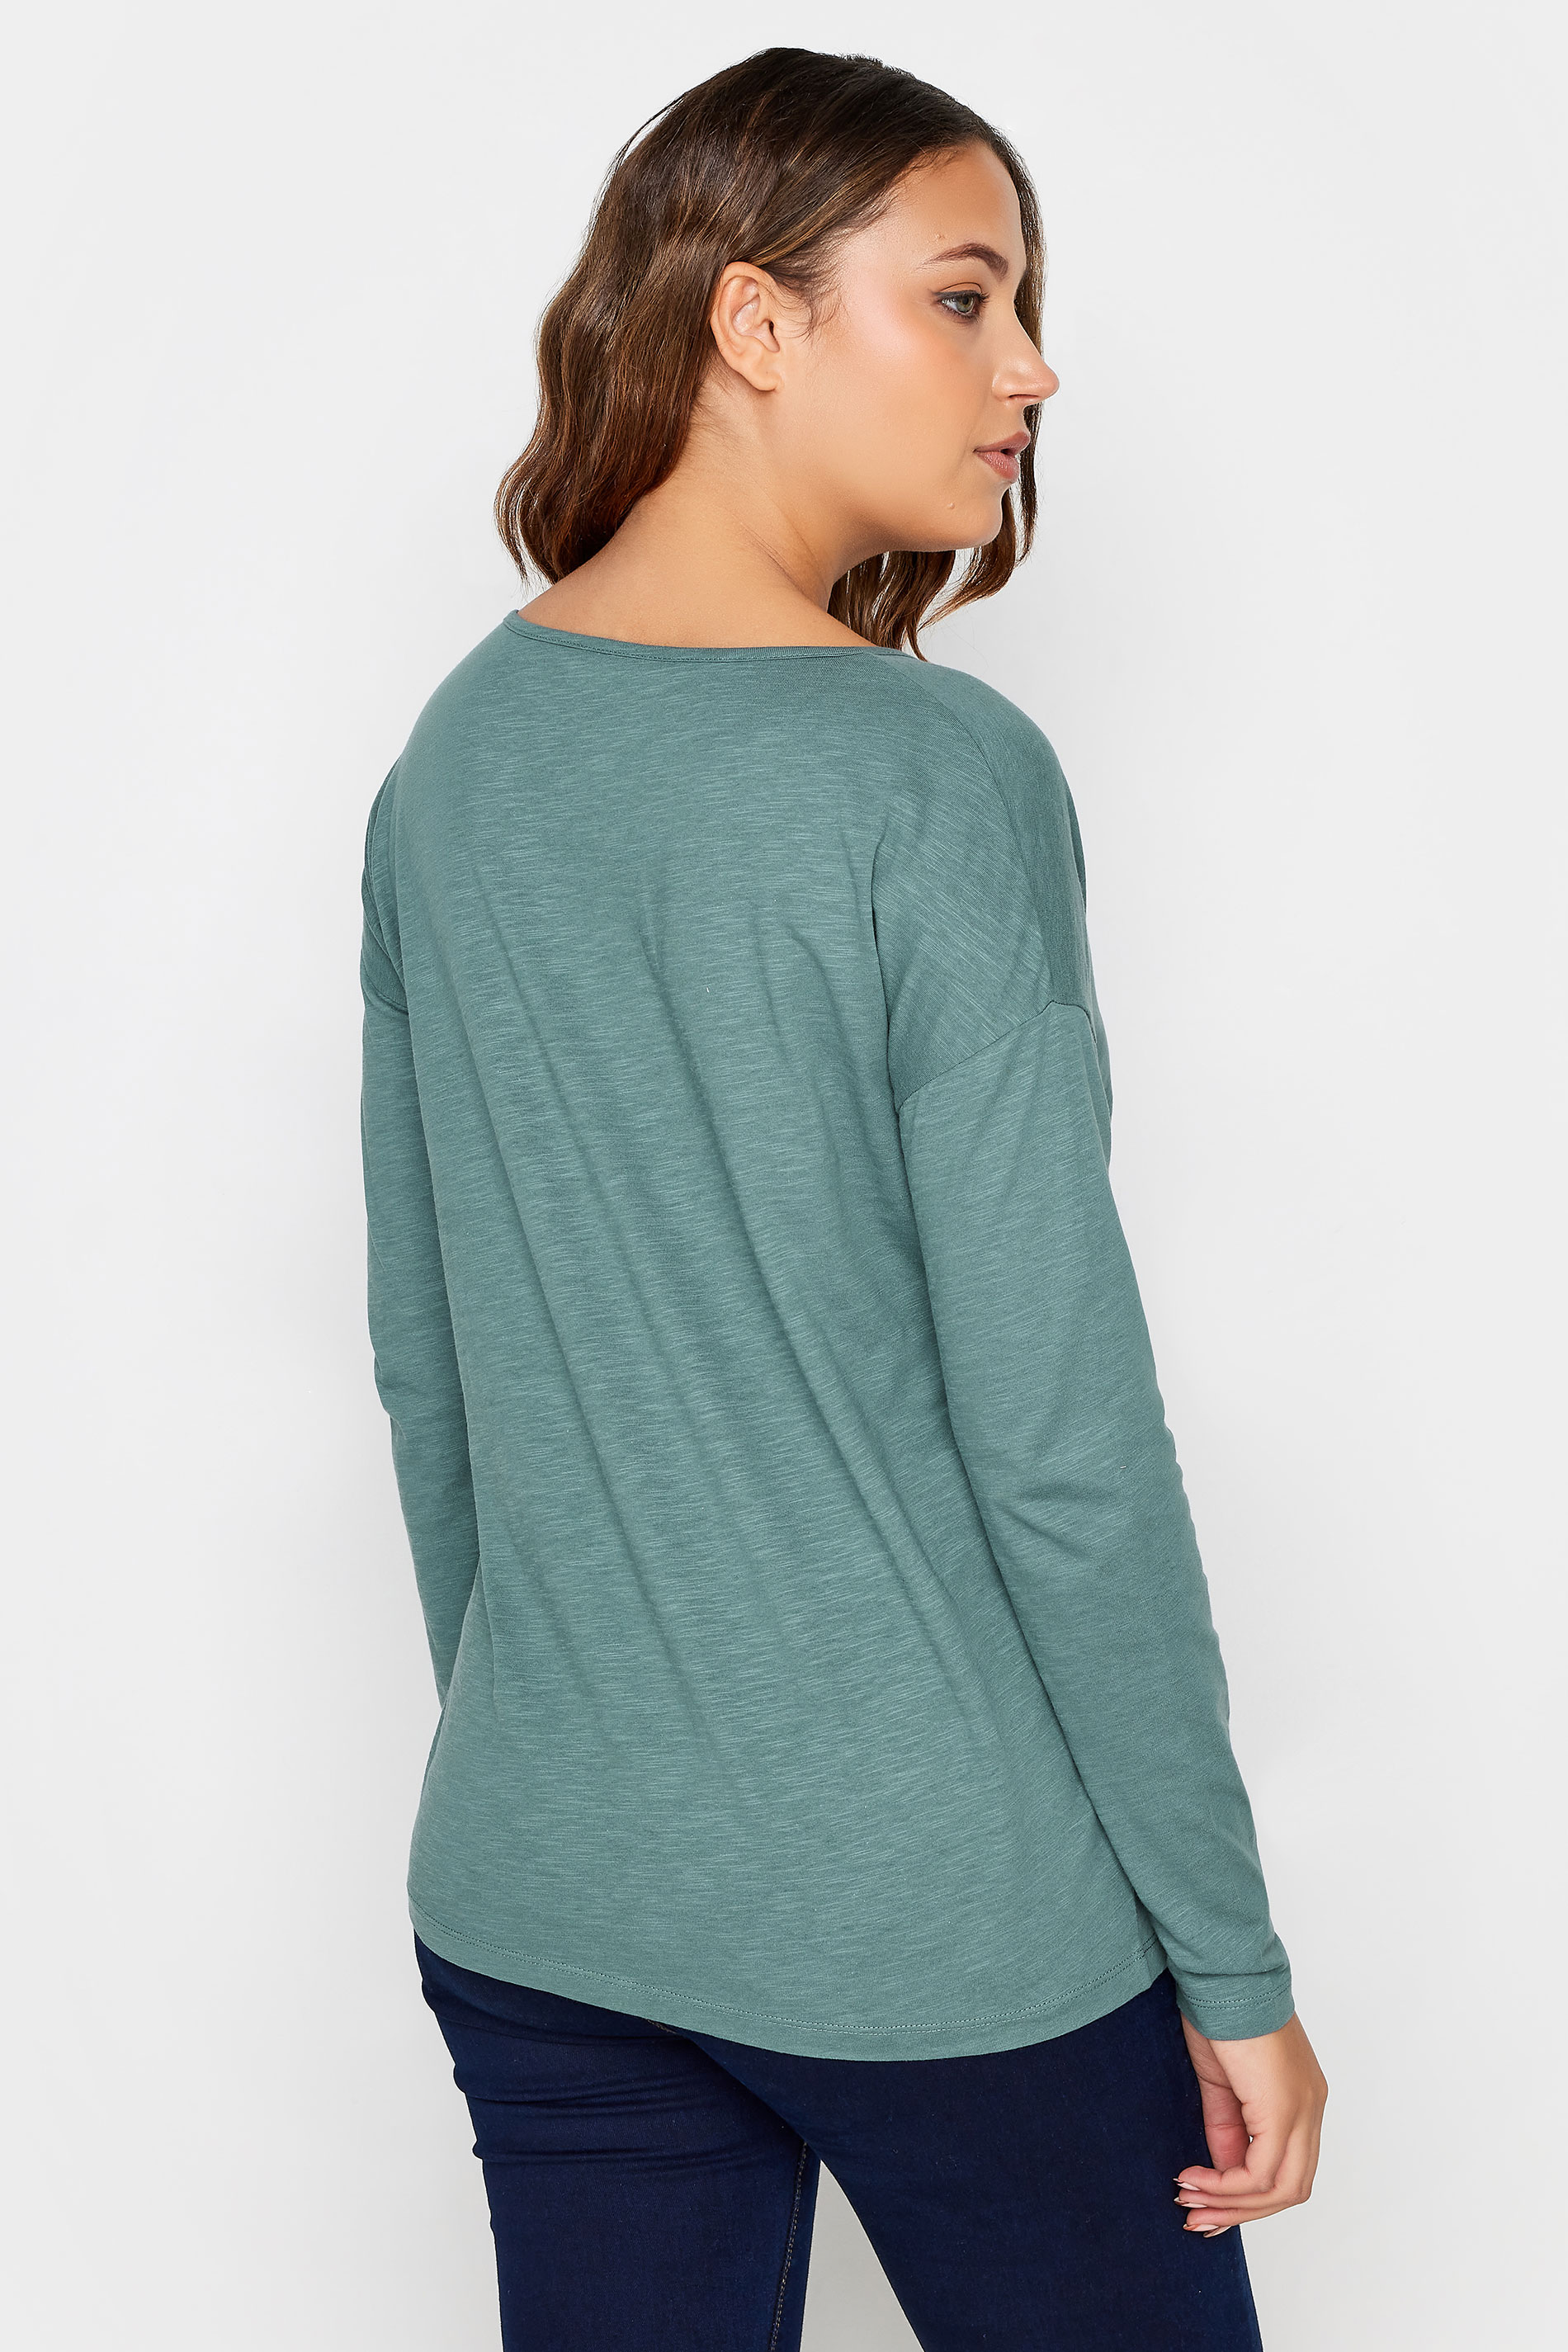 LTS Tall Teal Blue V-Neck Cotton T-Shirt | Long Tall Sally 3